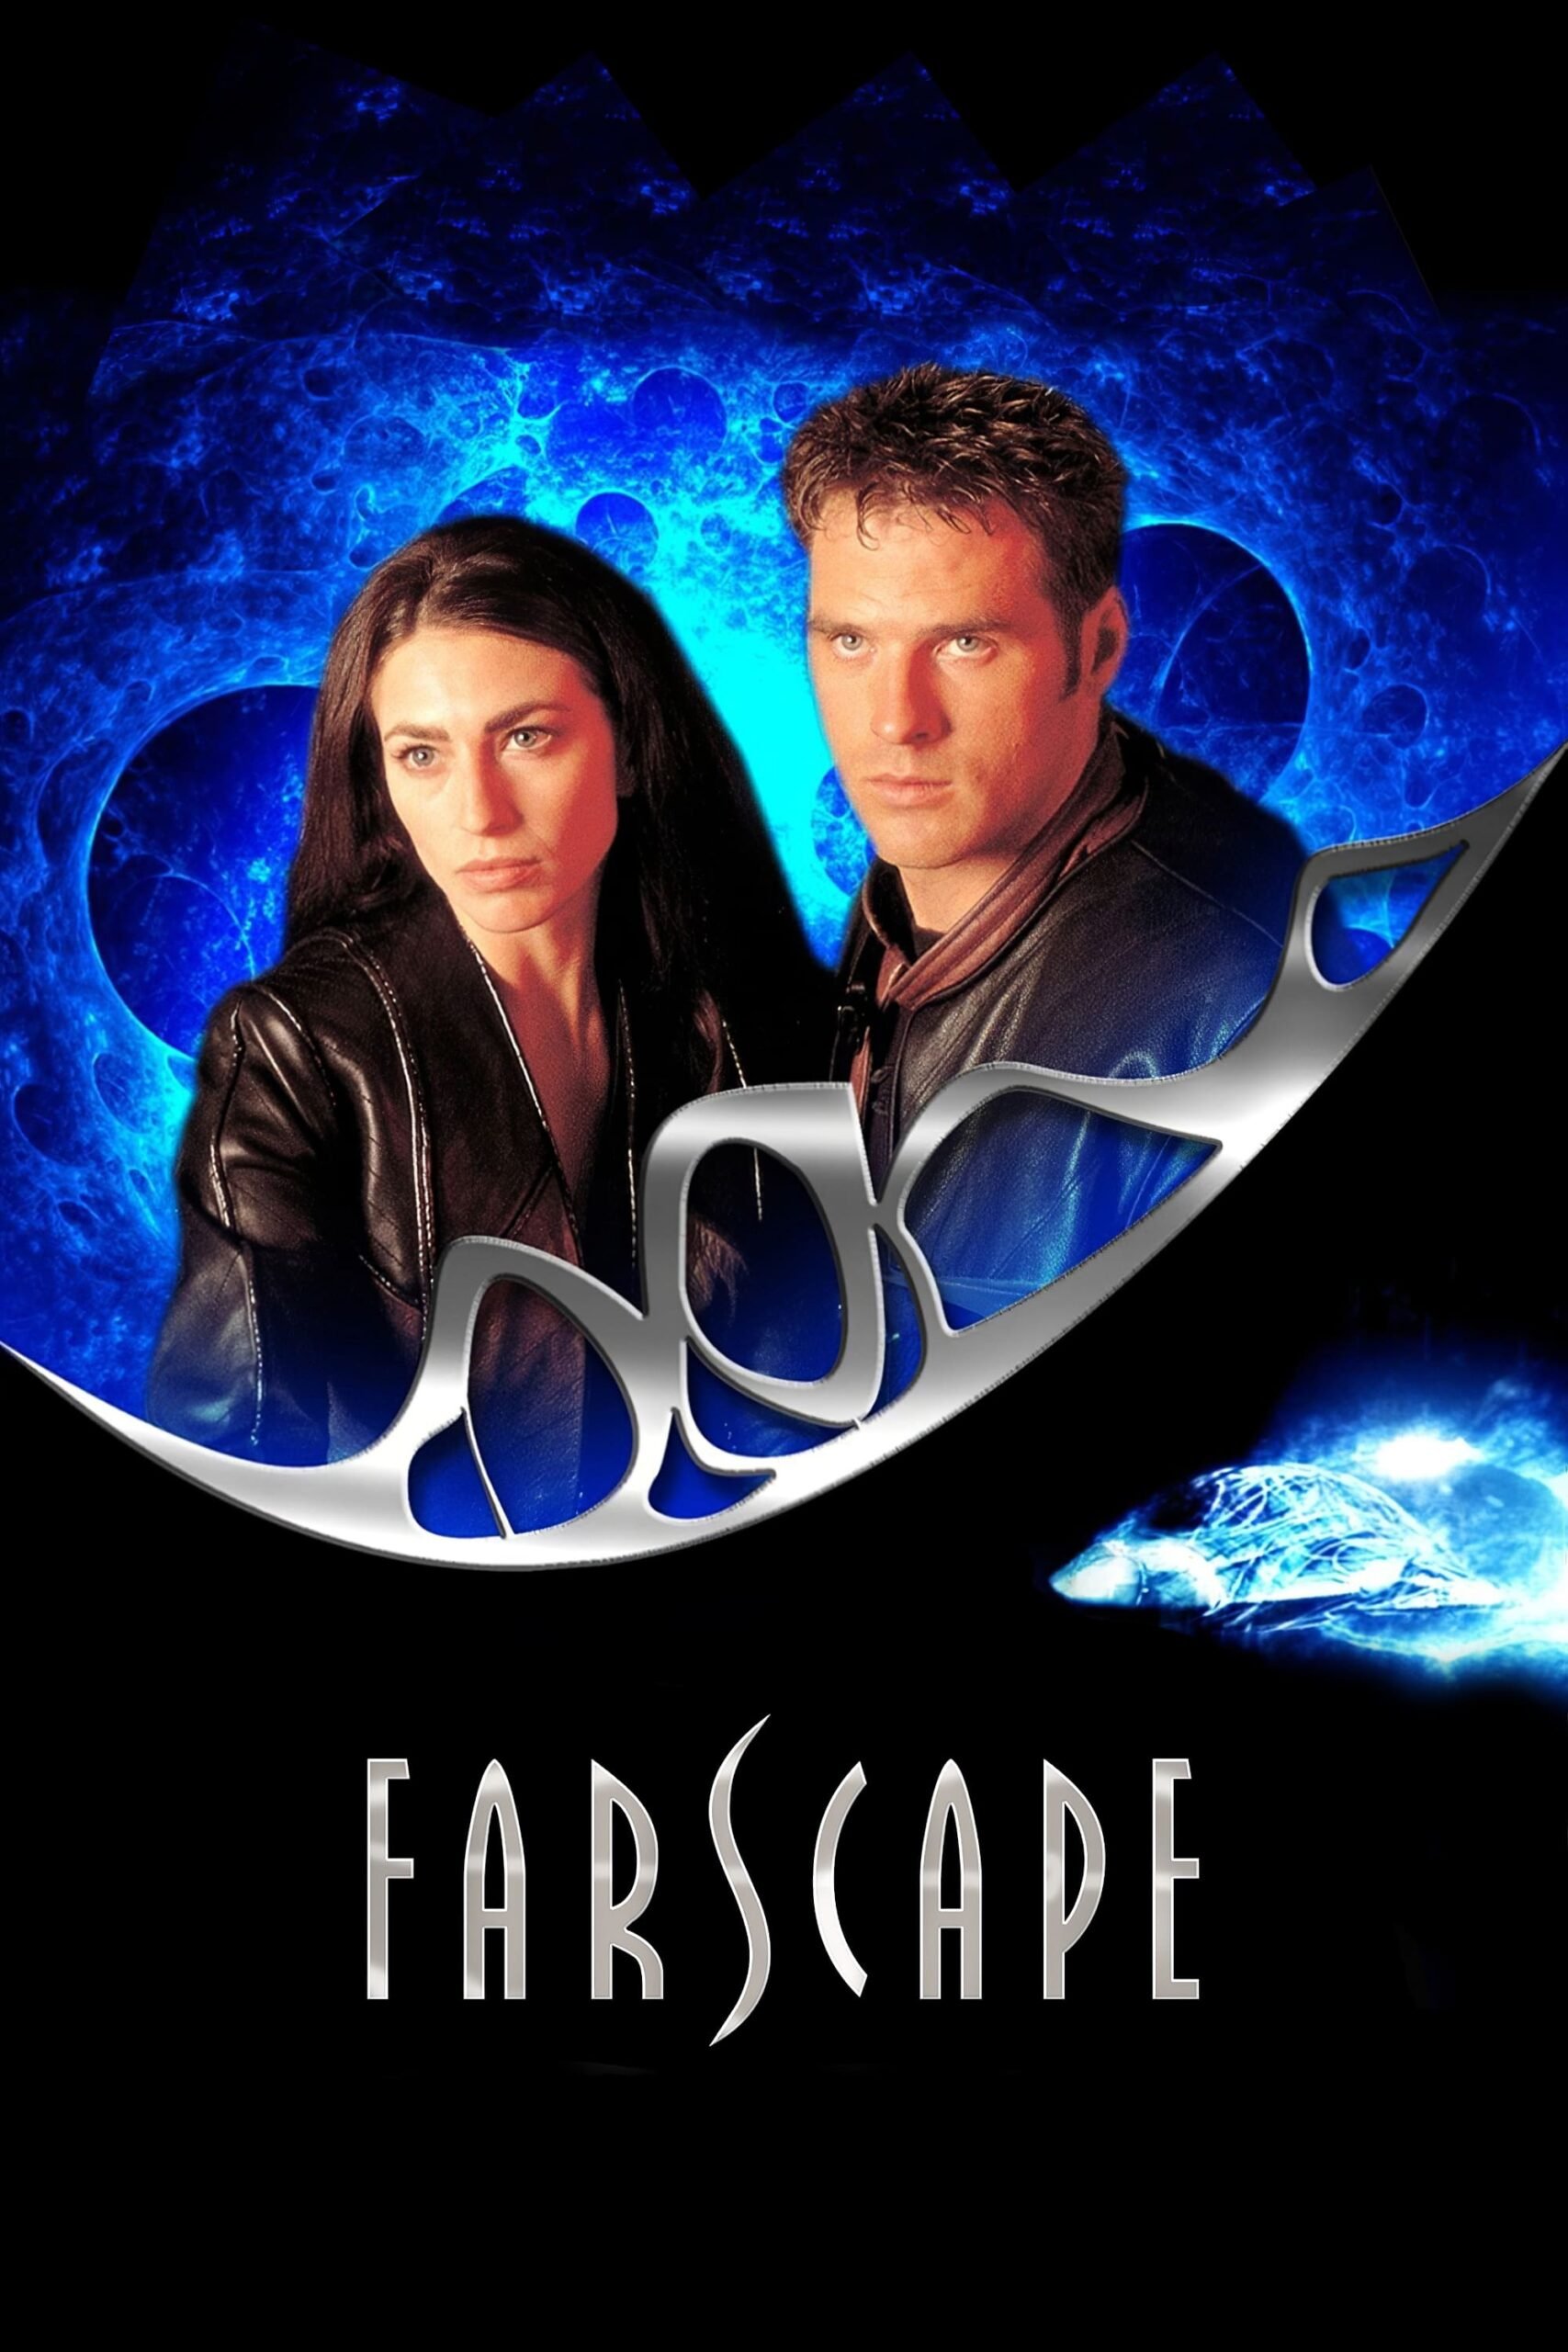 Plakát pro film “Farscape”